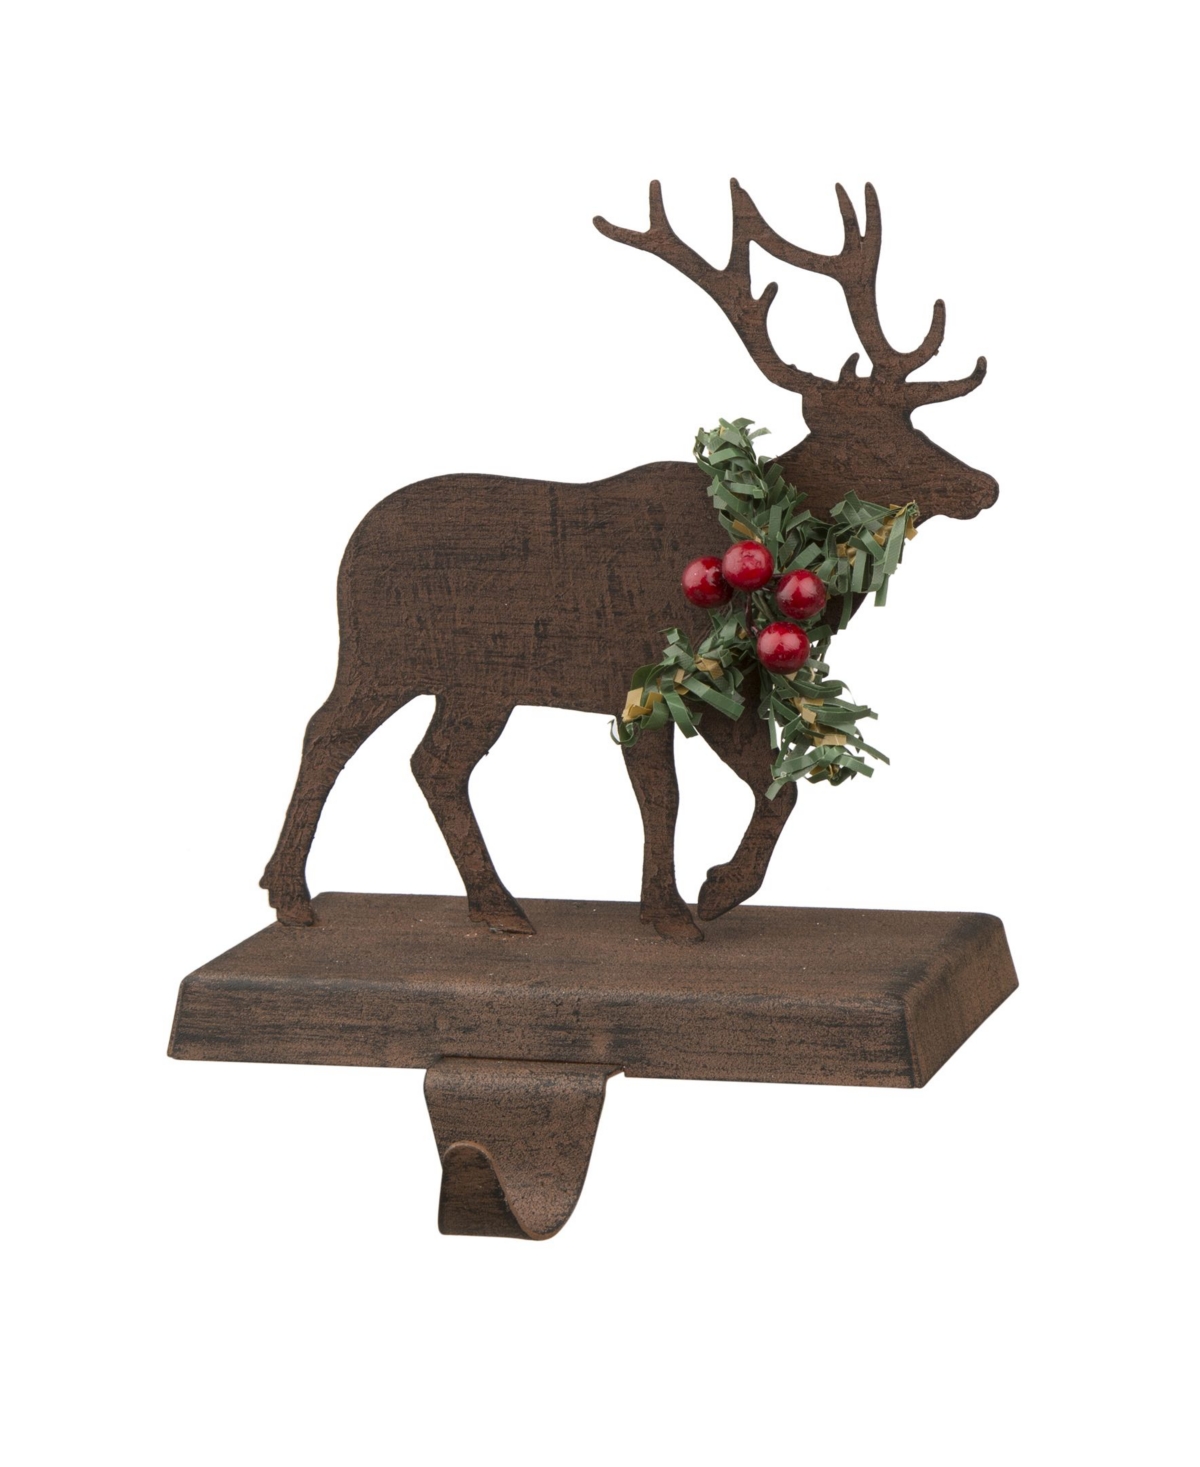 6.50" H Wooden Reindeer Stocking Holder - Brown